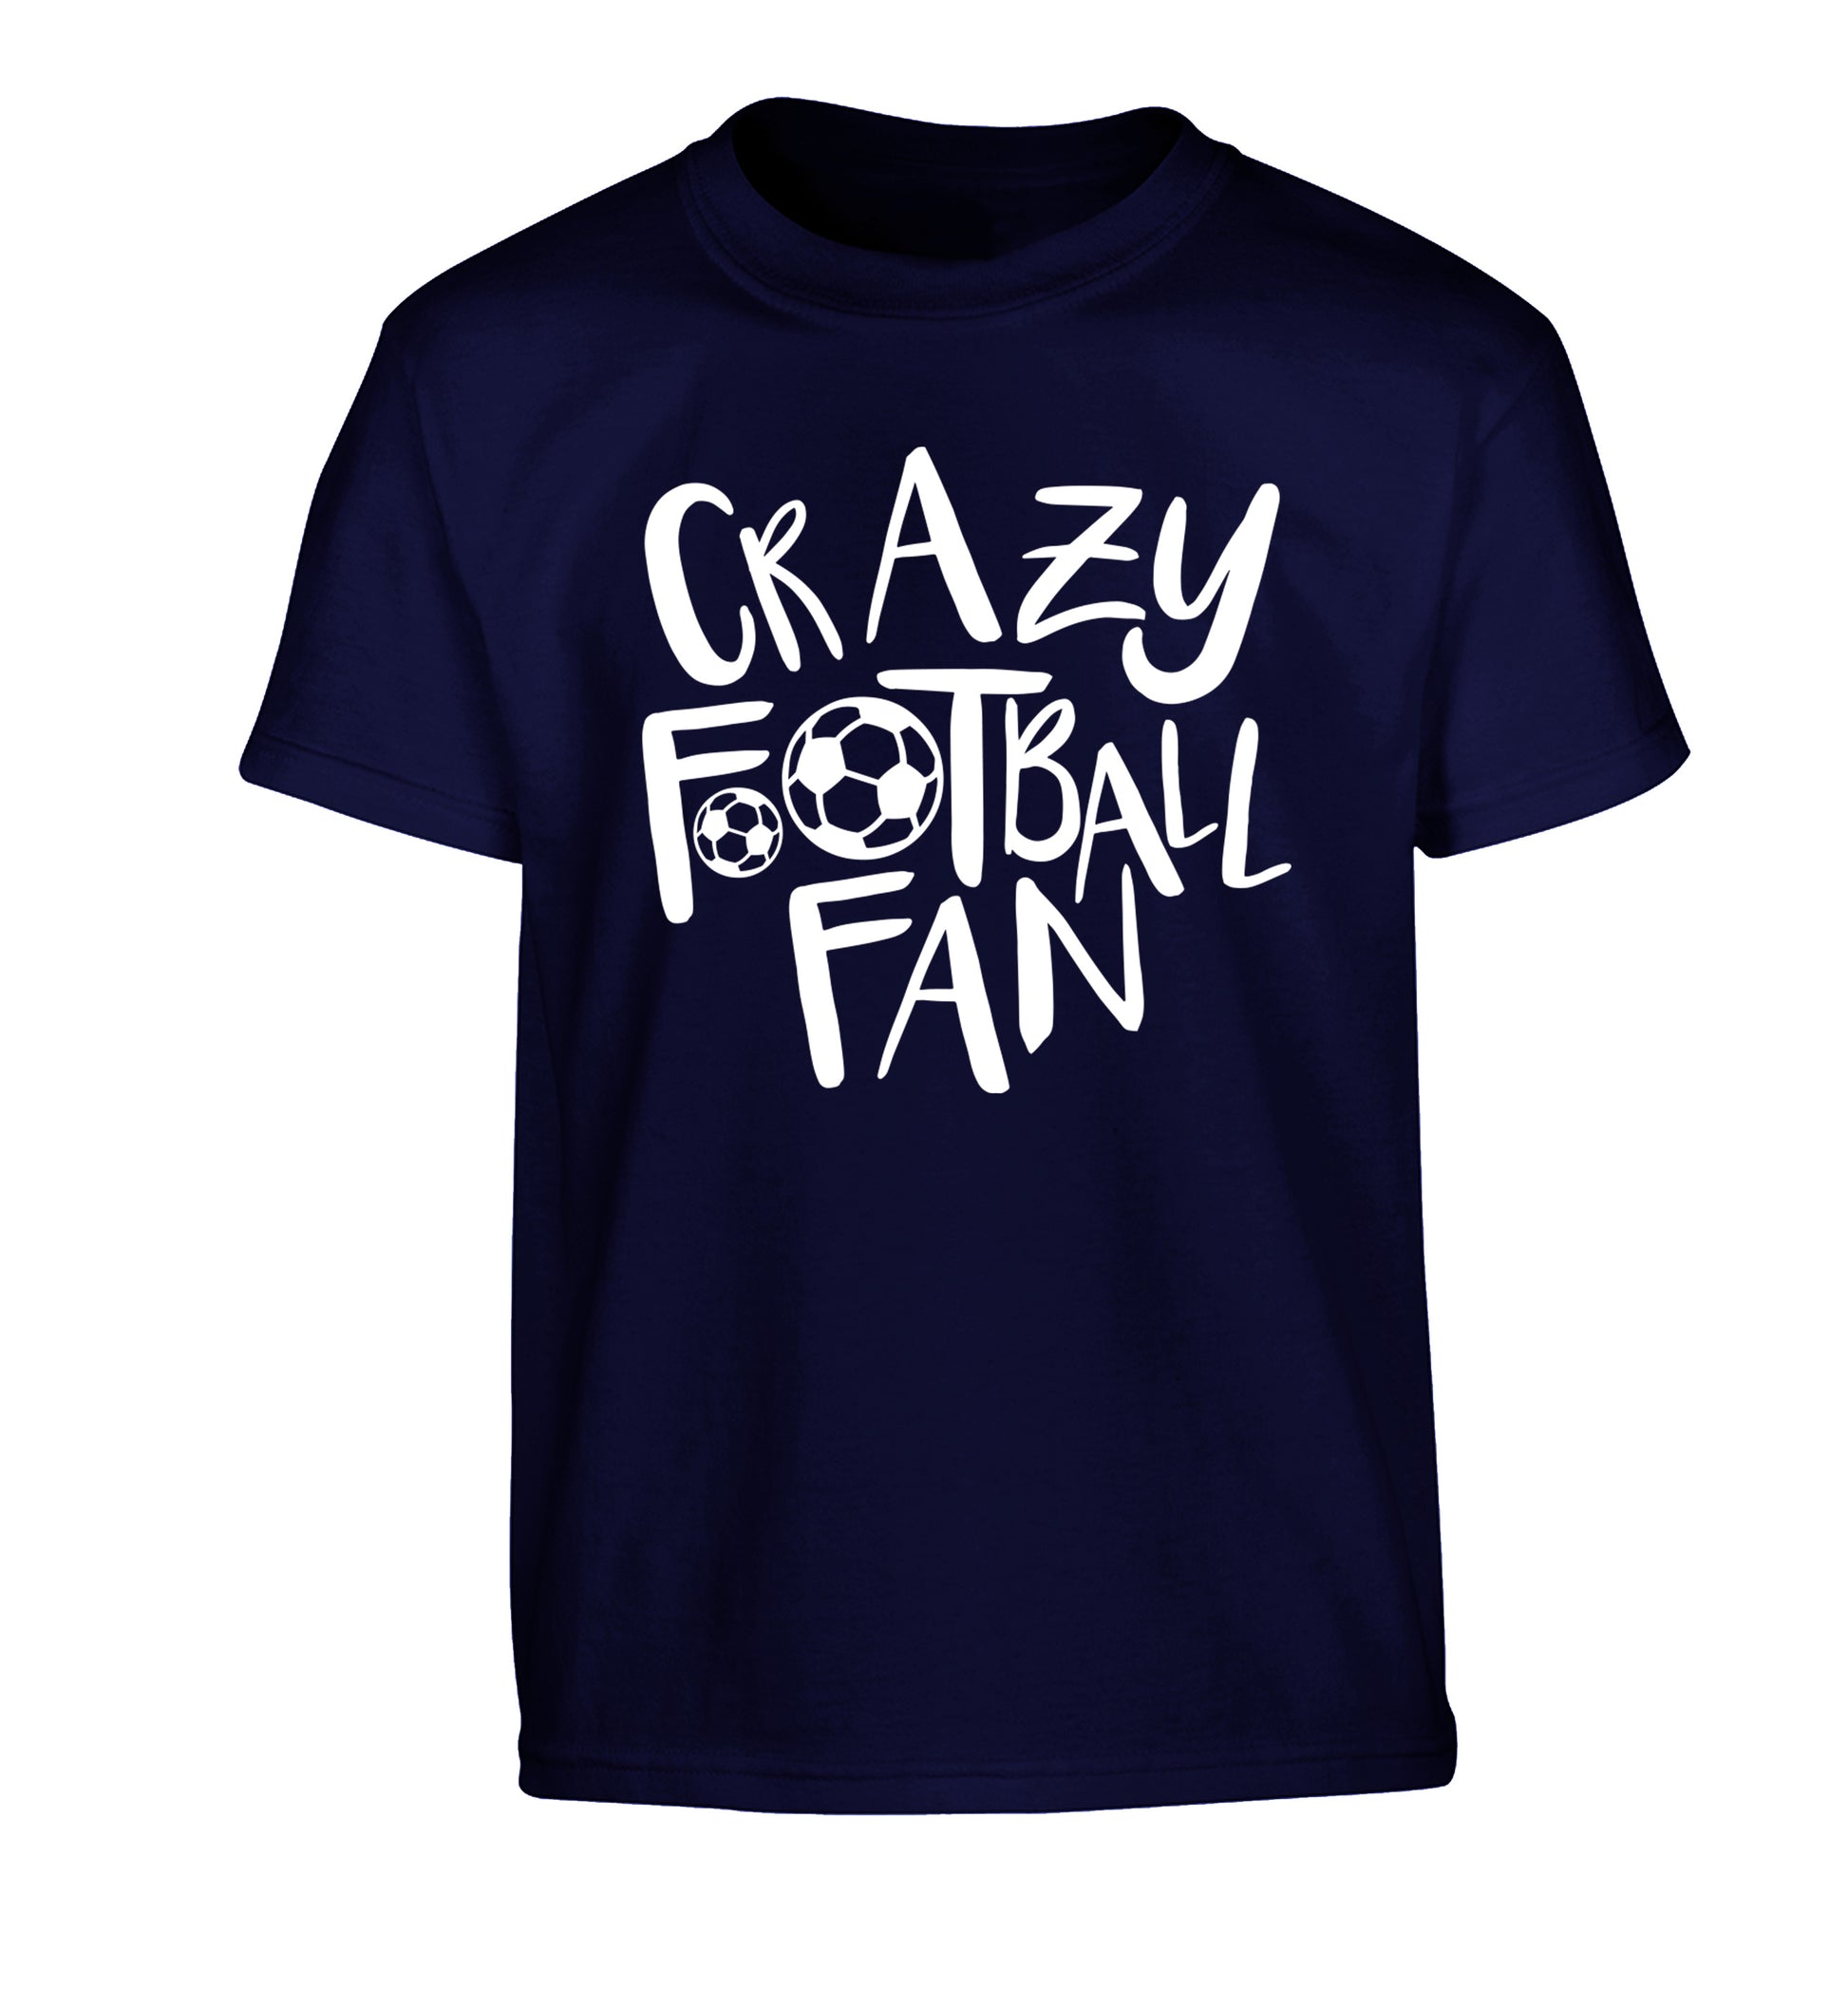 Crazy football fan Children's navy Tshirt 12-14 Years